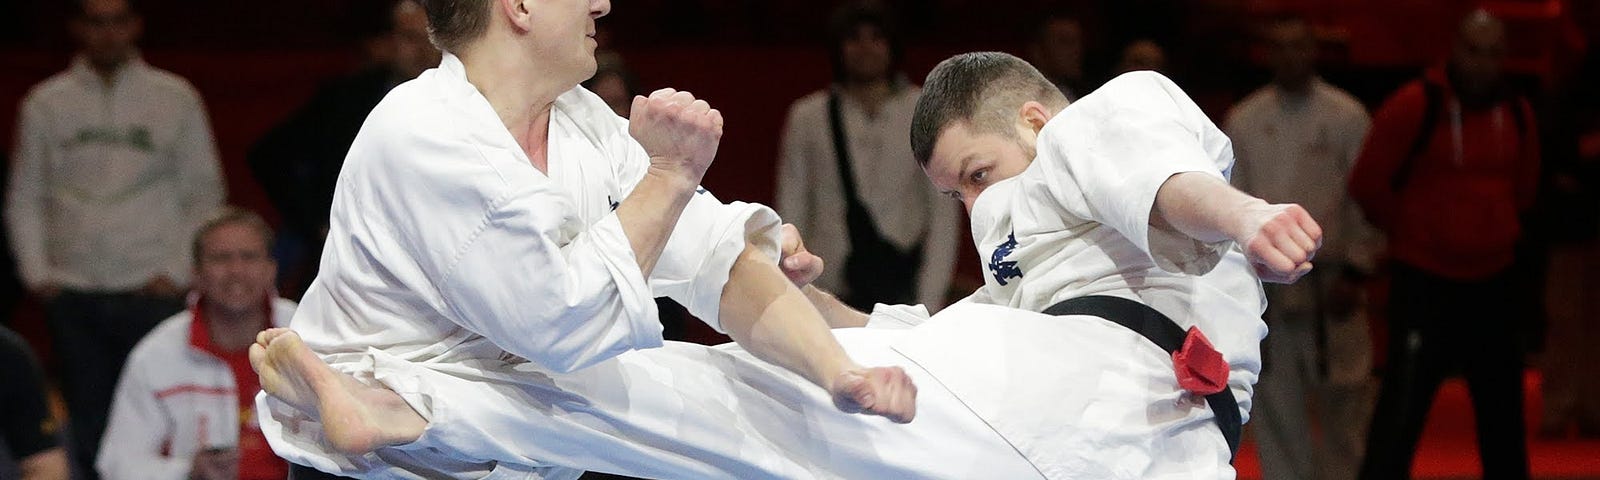 A Karateka performs a kick against an opponent.